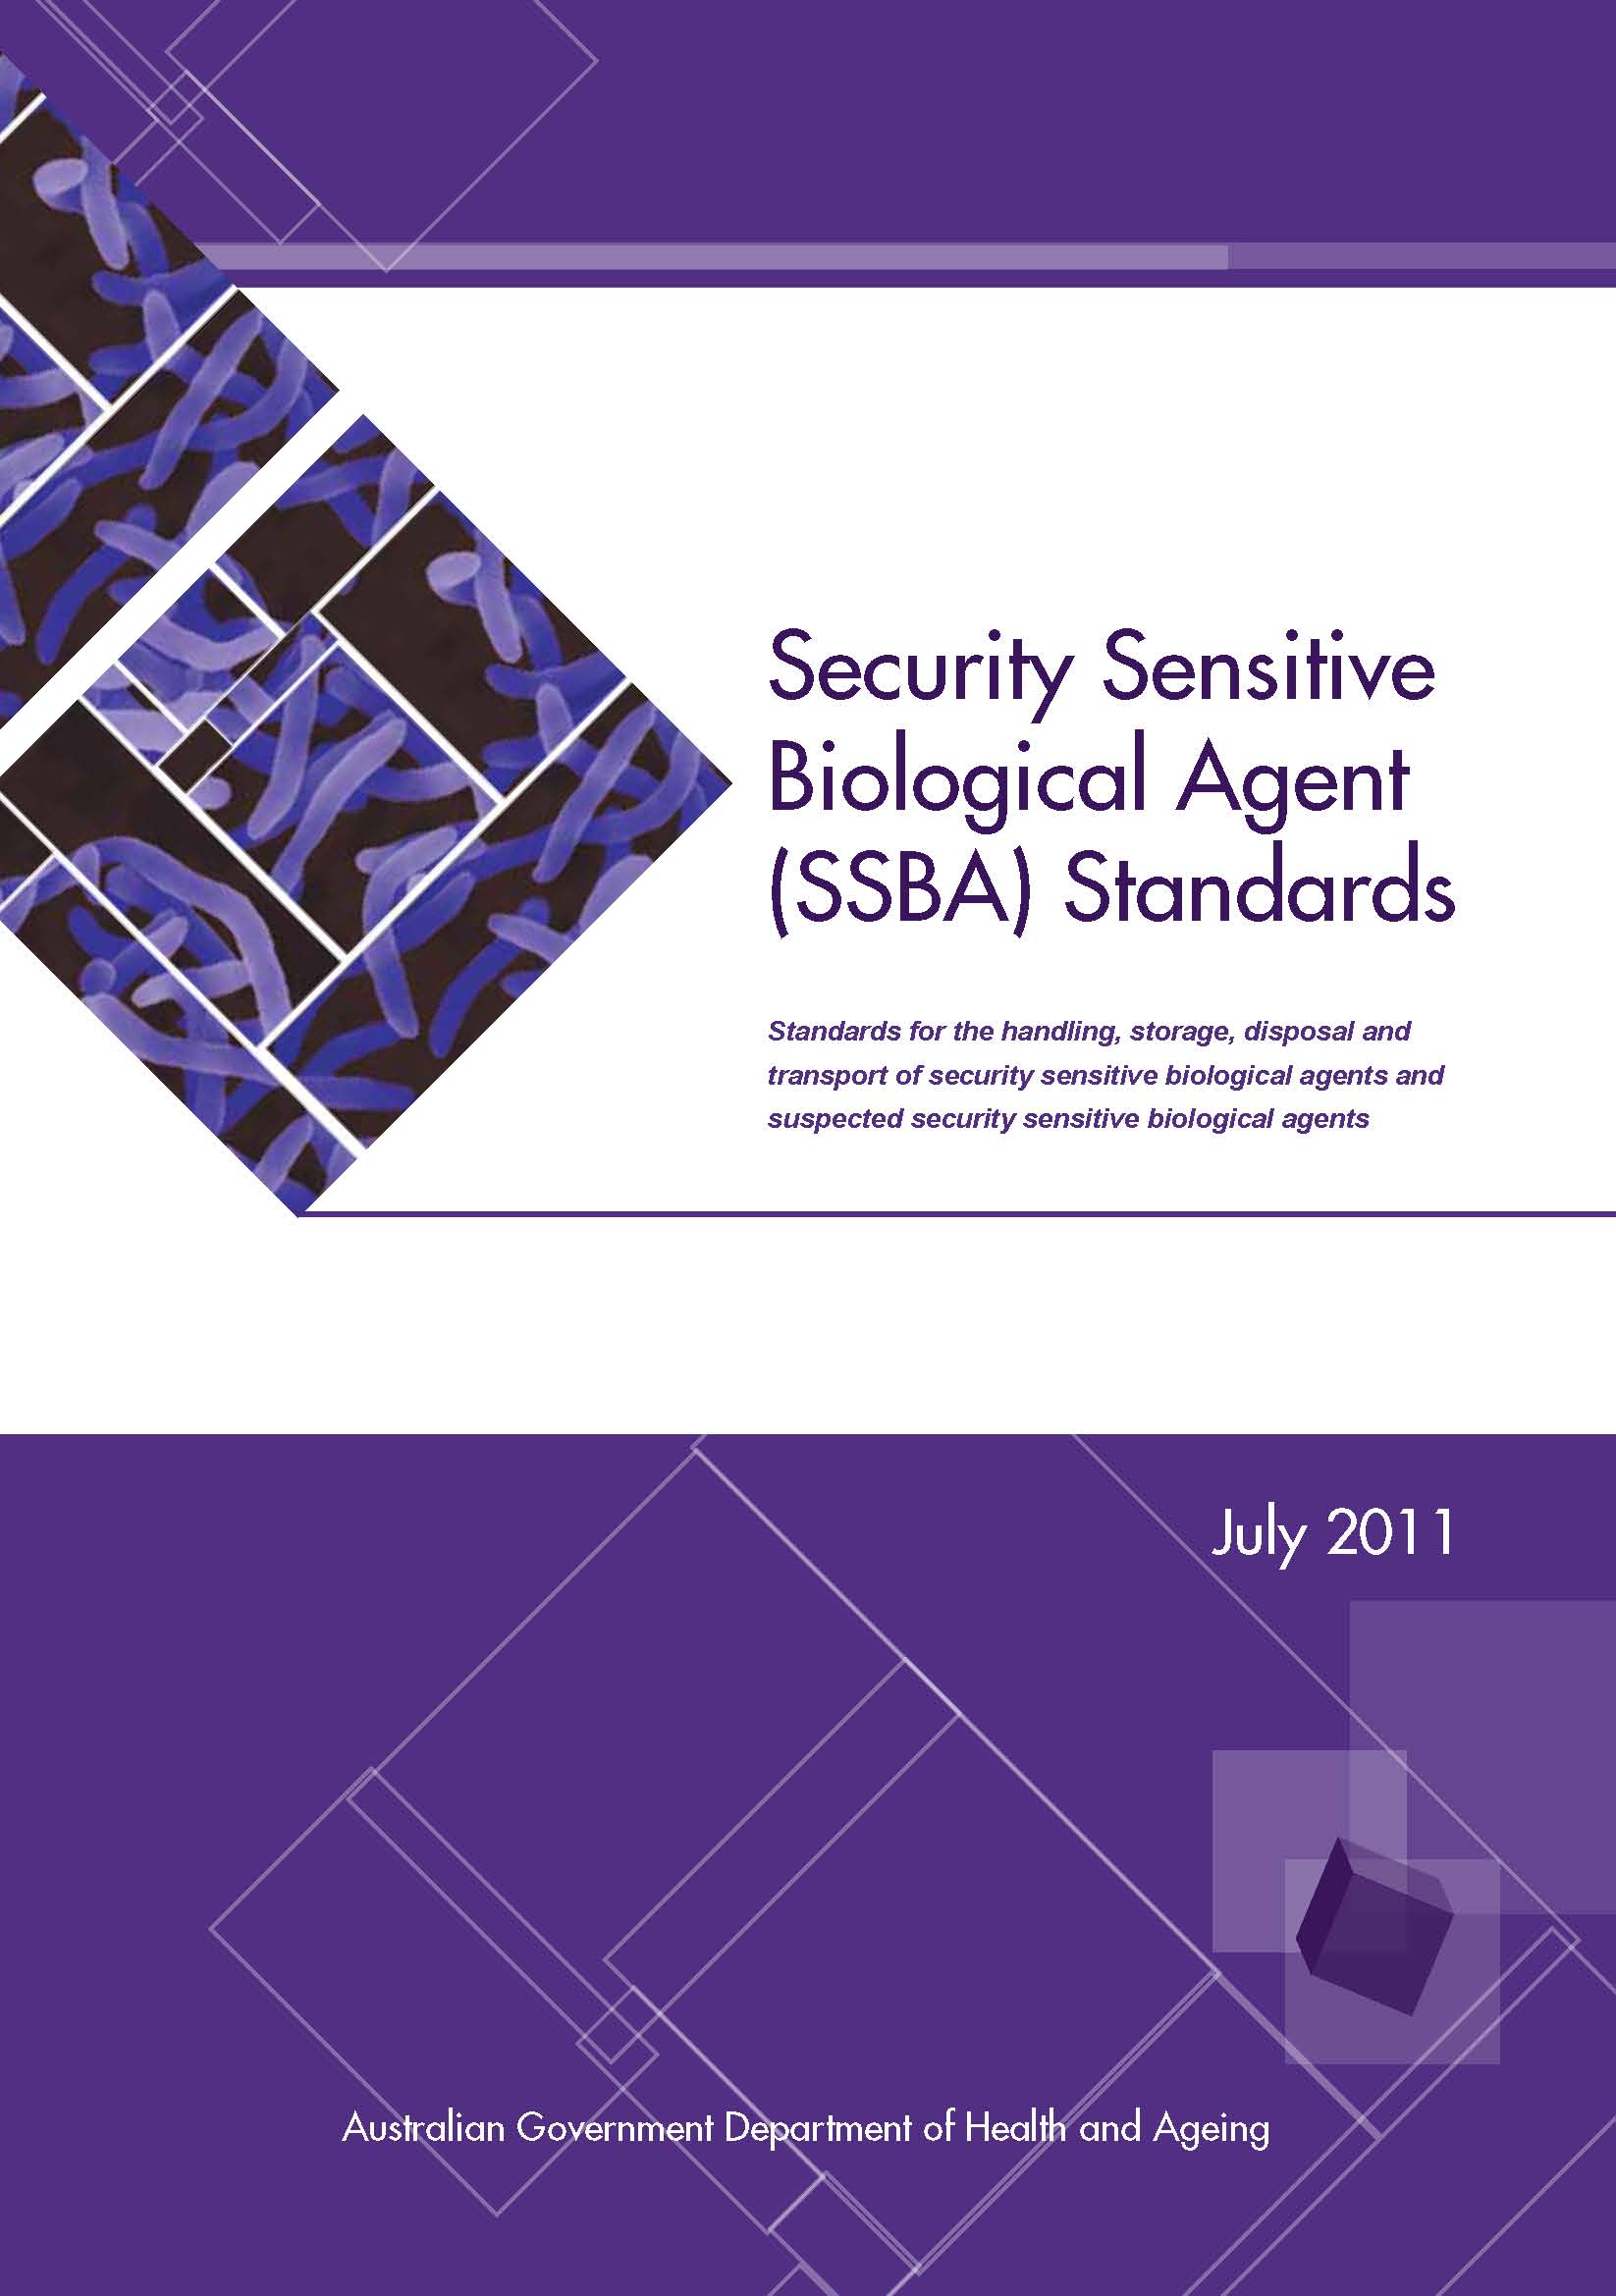 SSBA Standards